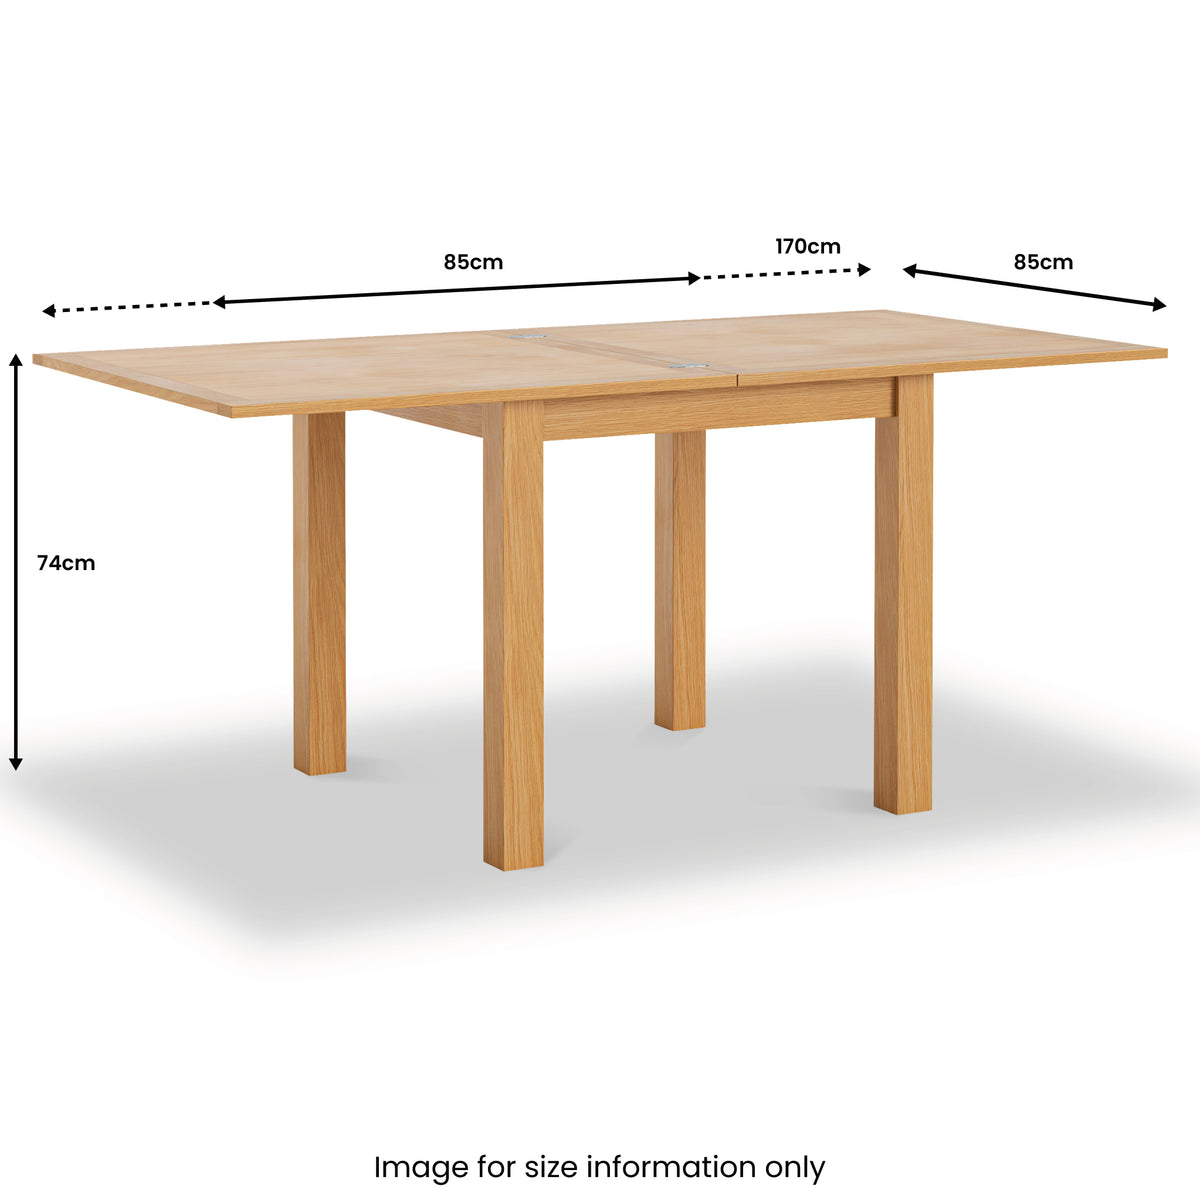 London Oak 85-170cm Flip Top Dining Table dimensions